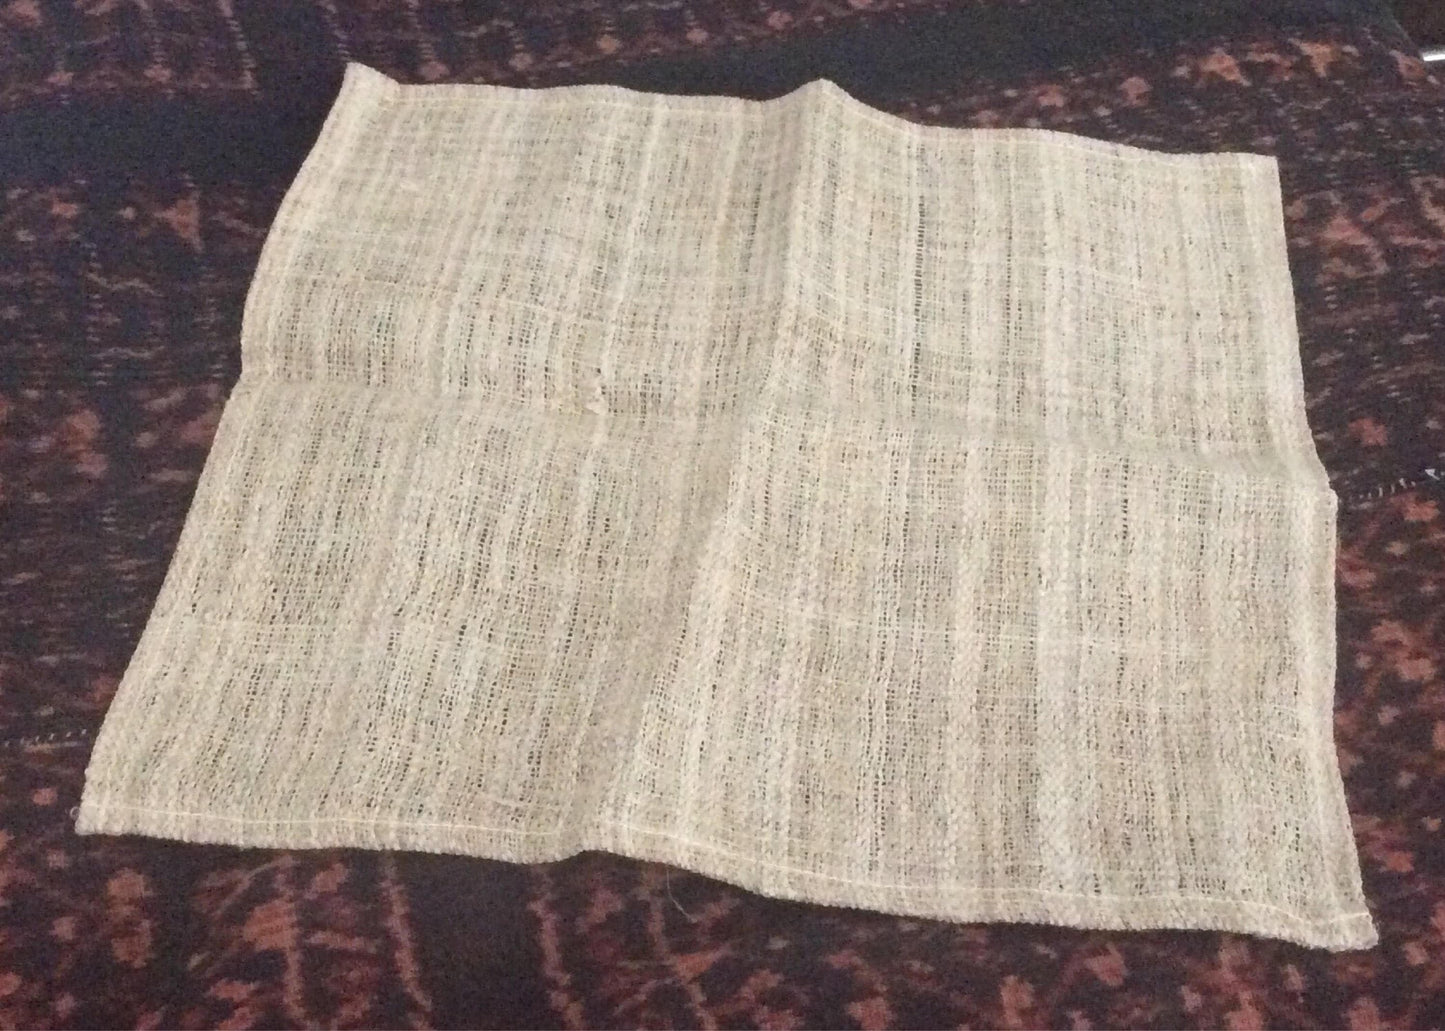 Hand woven Hemp cloth  31 x 31 cm